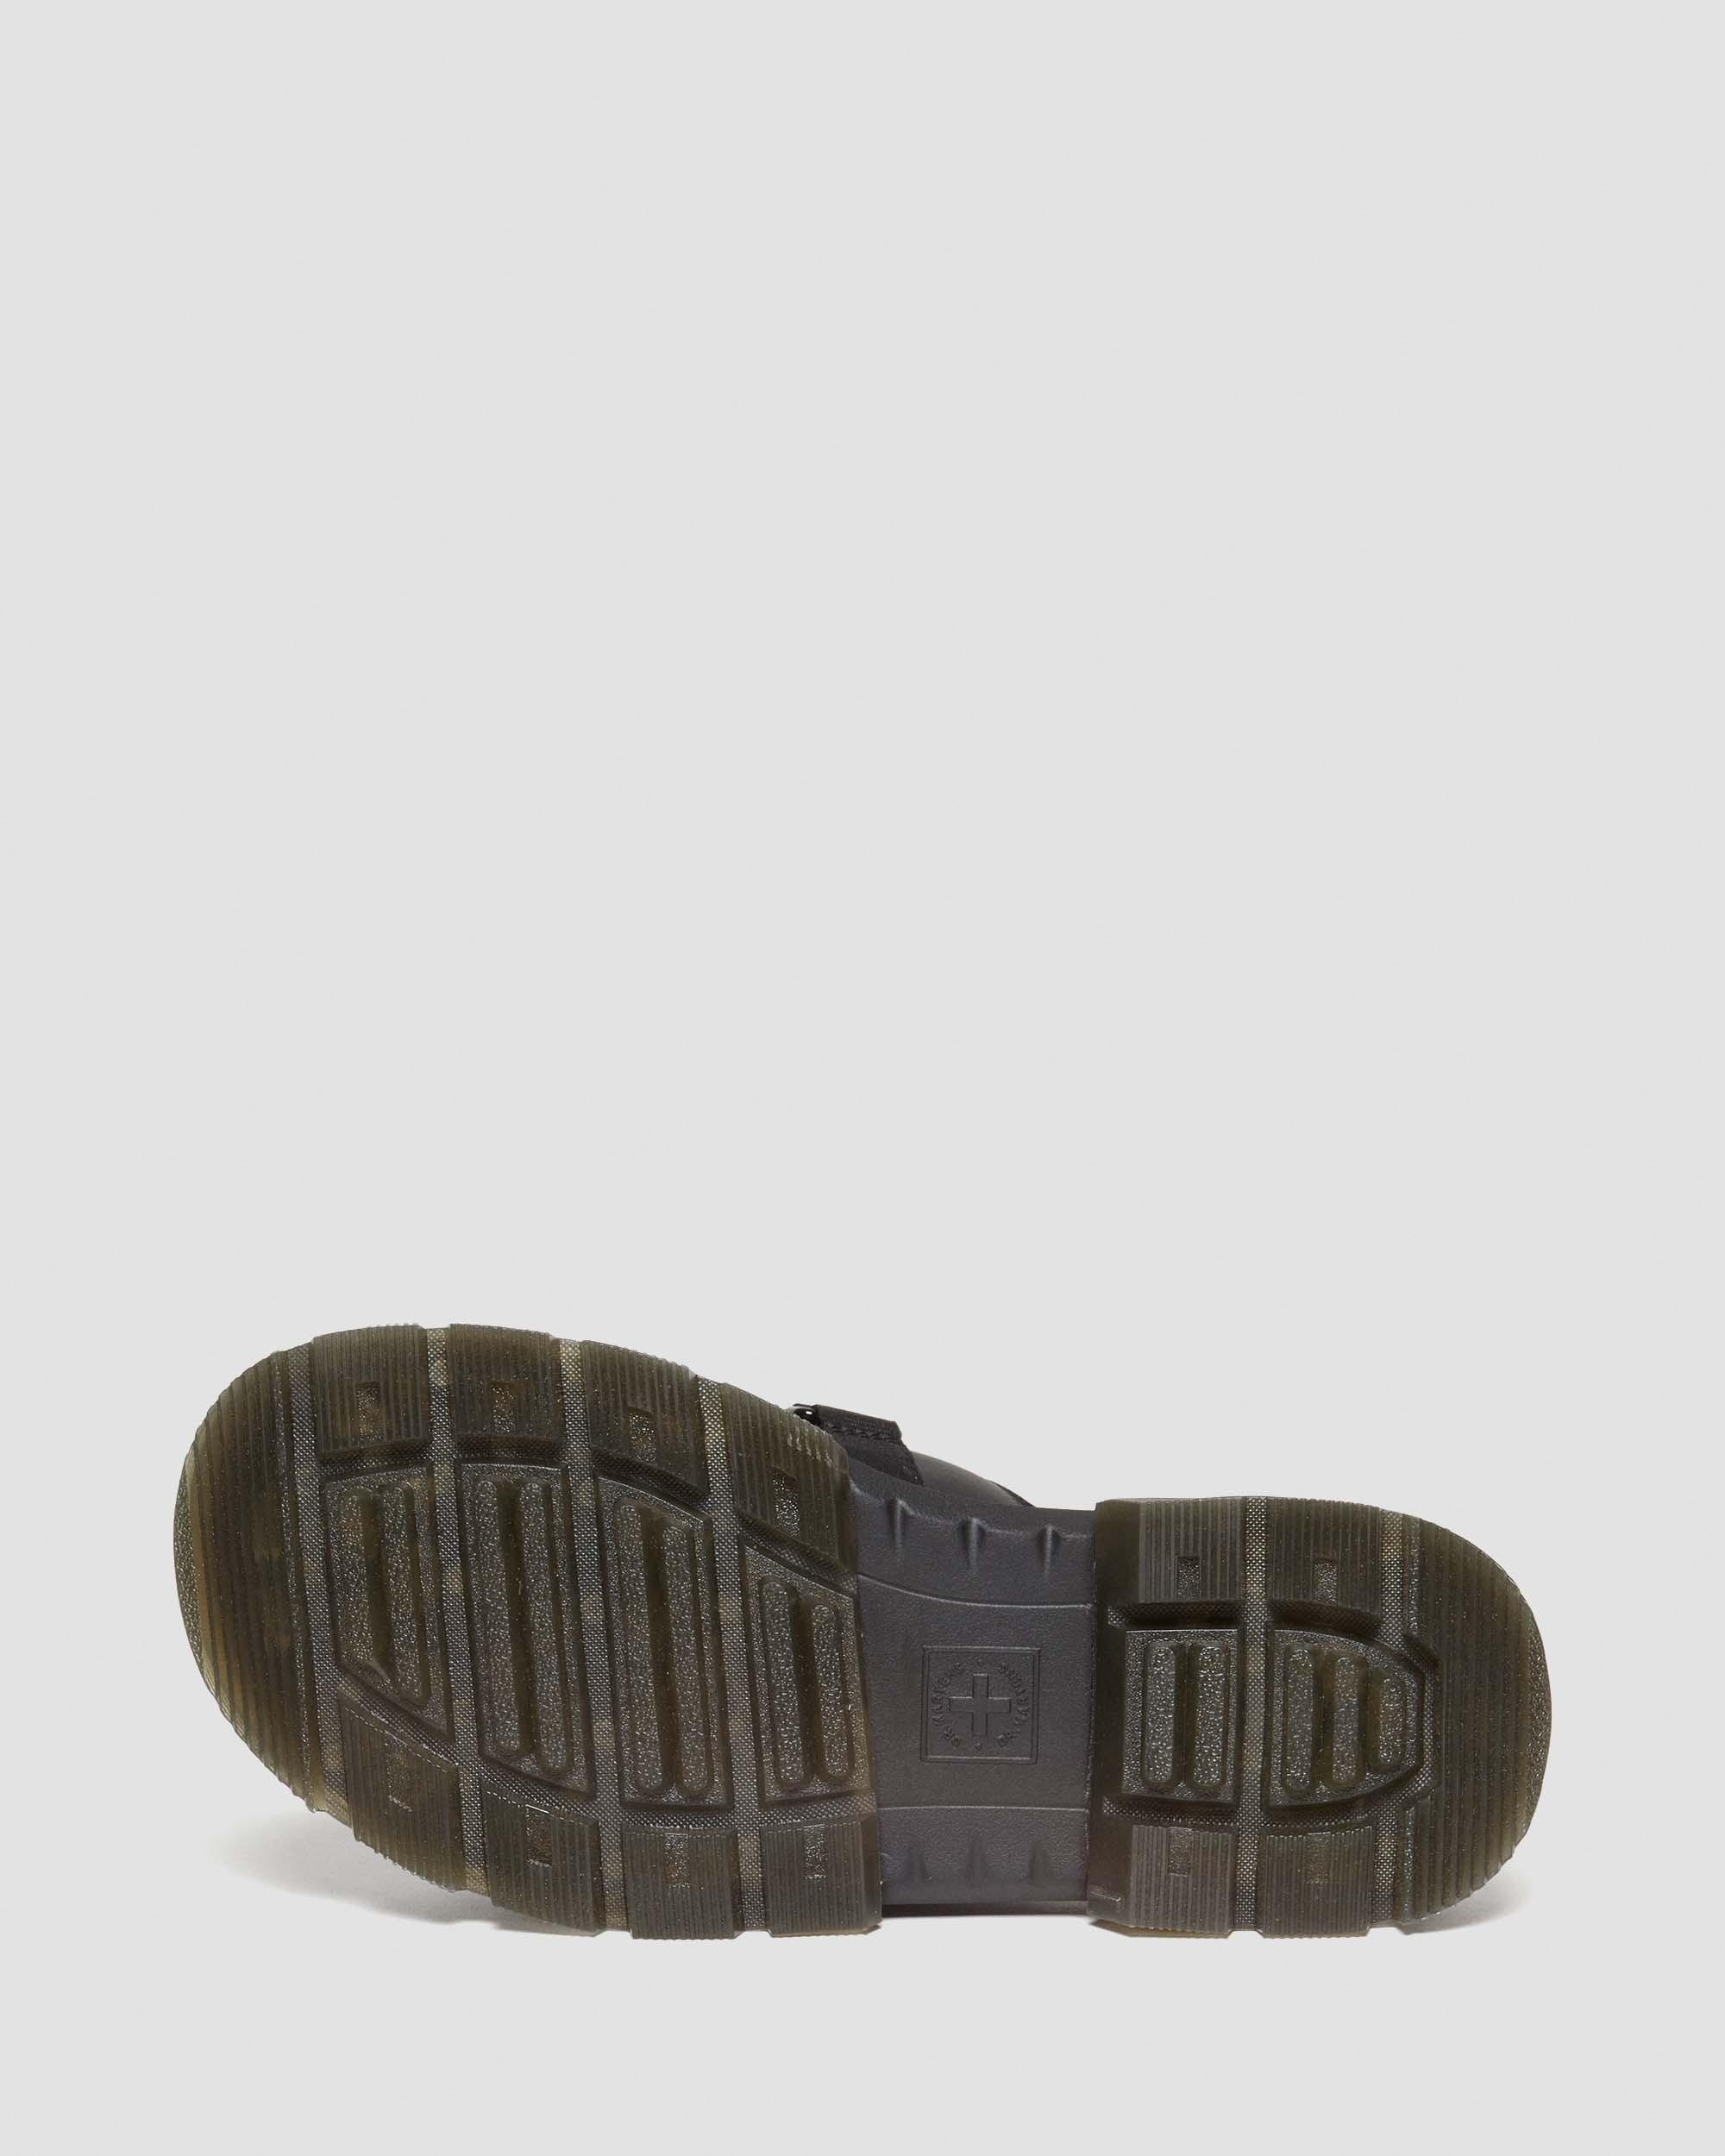 Ayce Leather & Webbing Sandals in Black